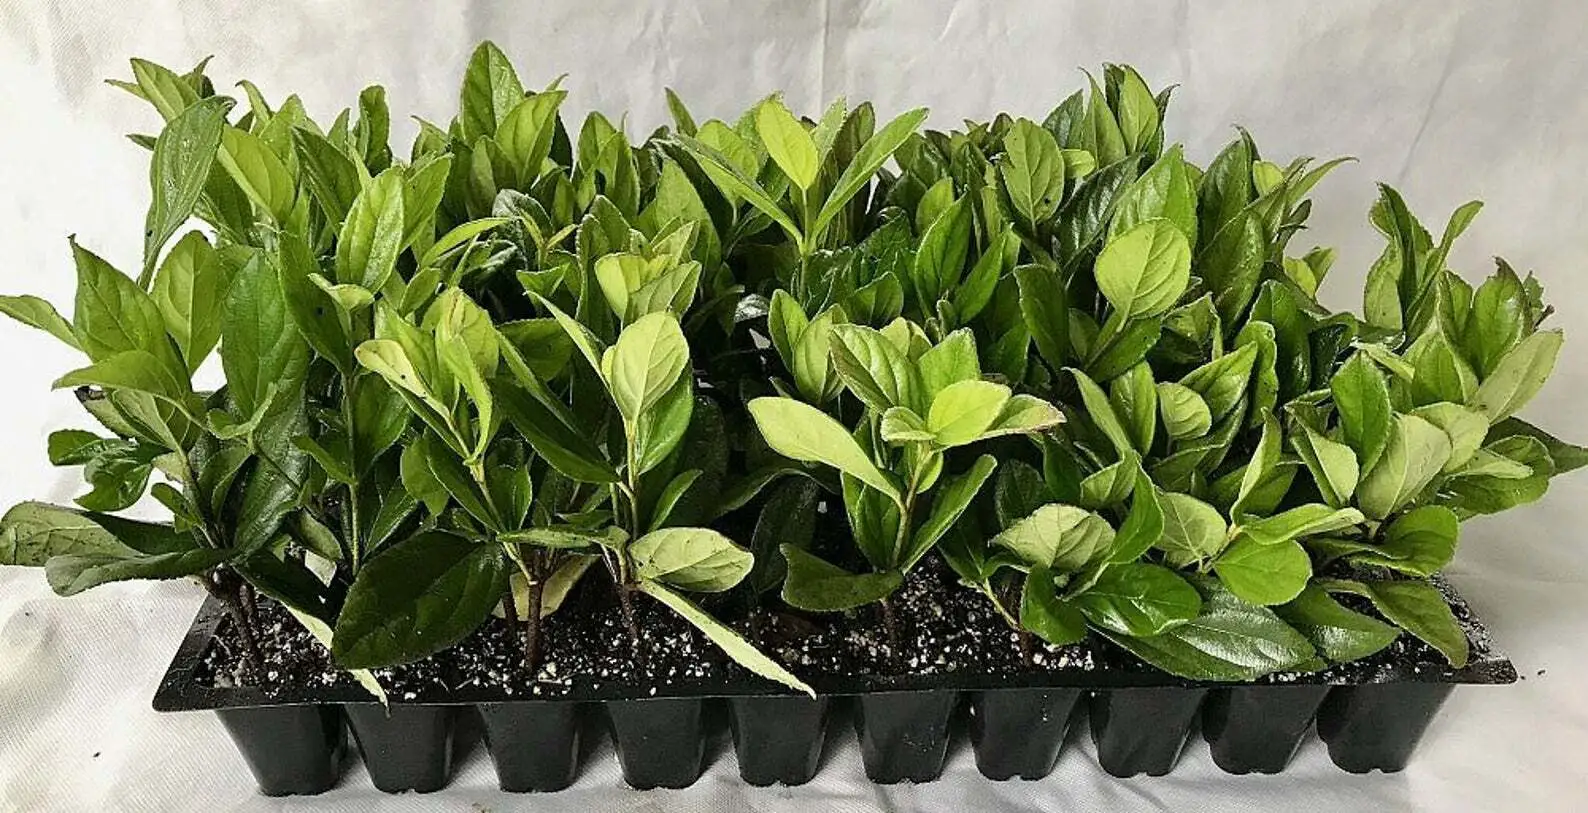 Viburnum Suspensum Live Plants Low Maintenance Shrub Privacy Hedge - $40.77